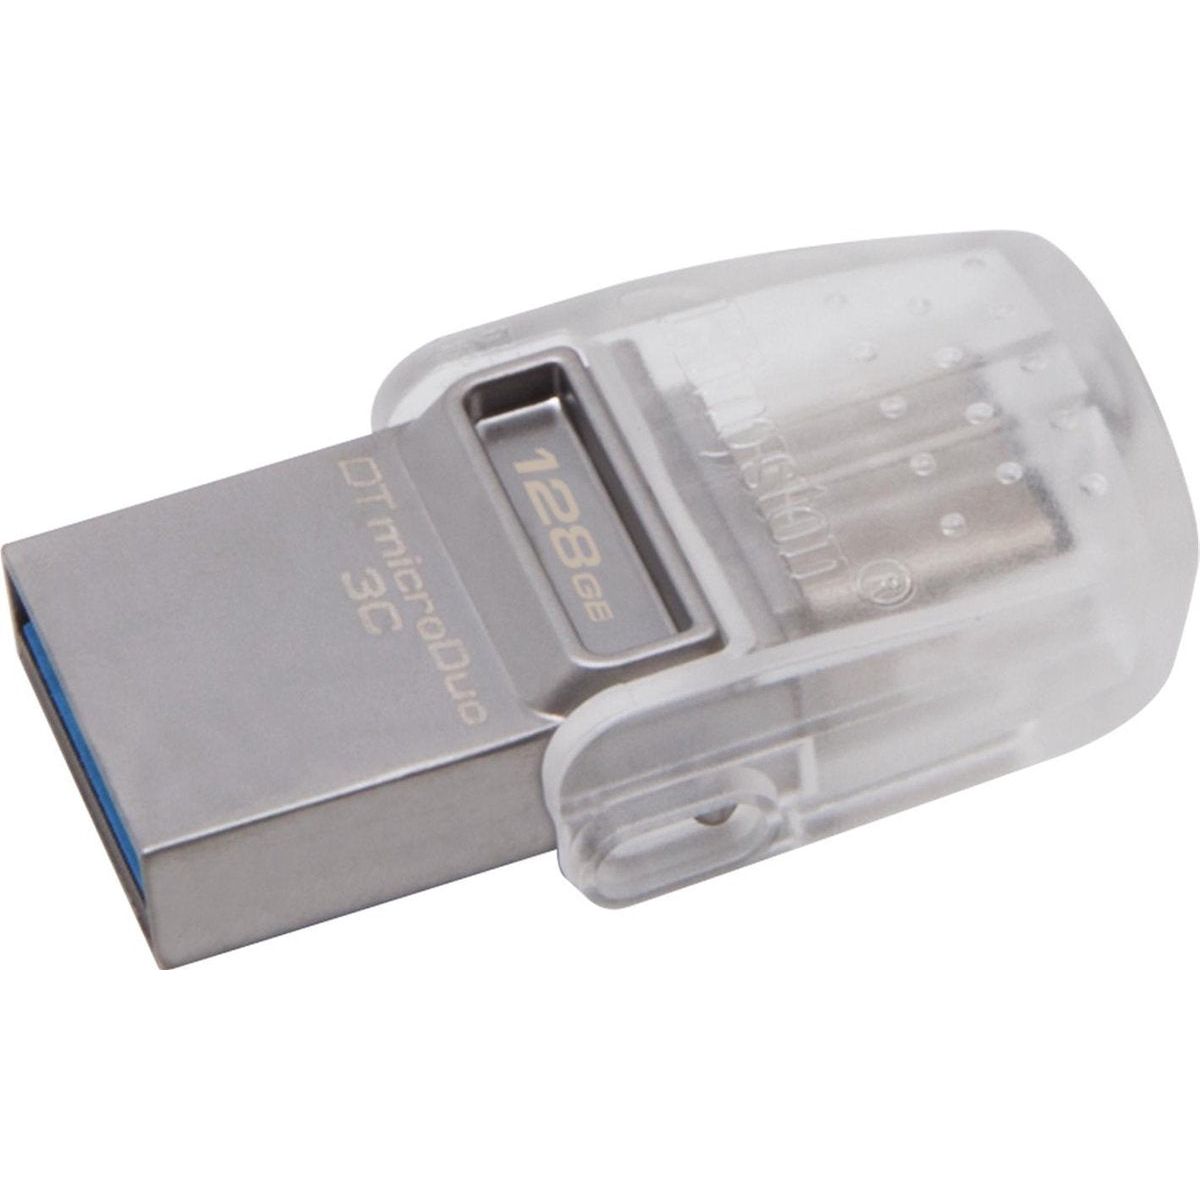 Kingston Dual Port micro Duo 3C - DUO USB stick - 128 GB - NLMAX